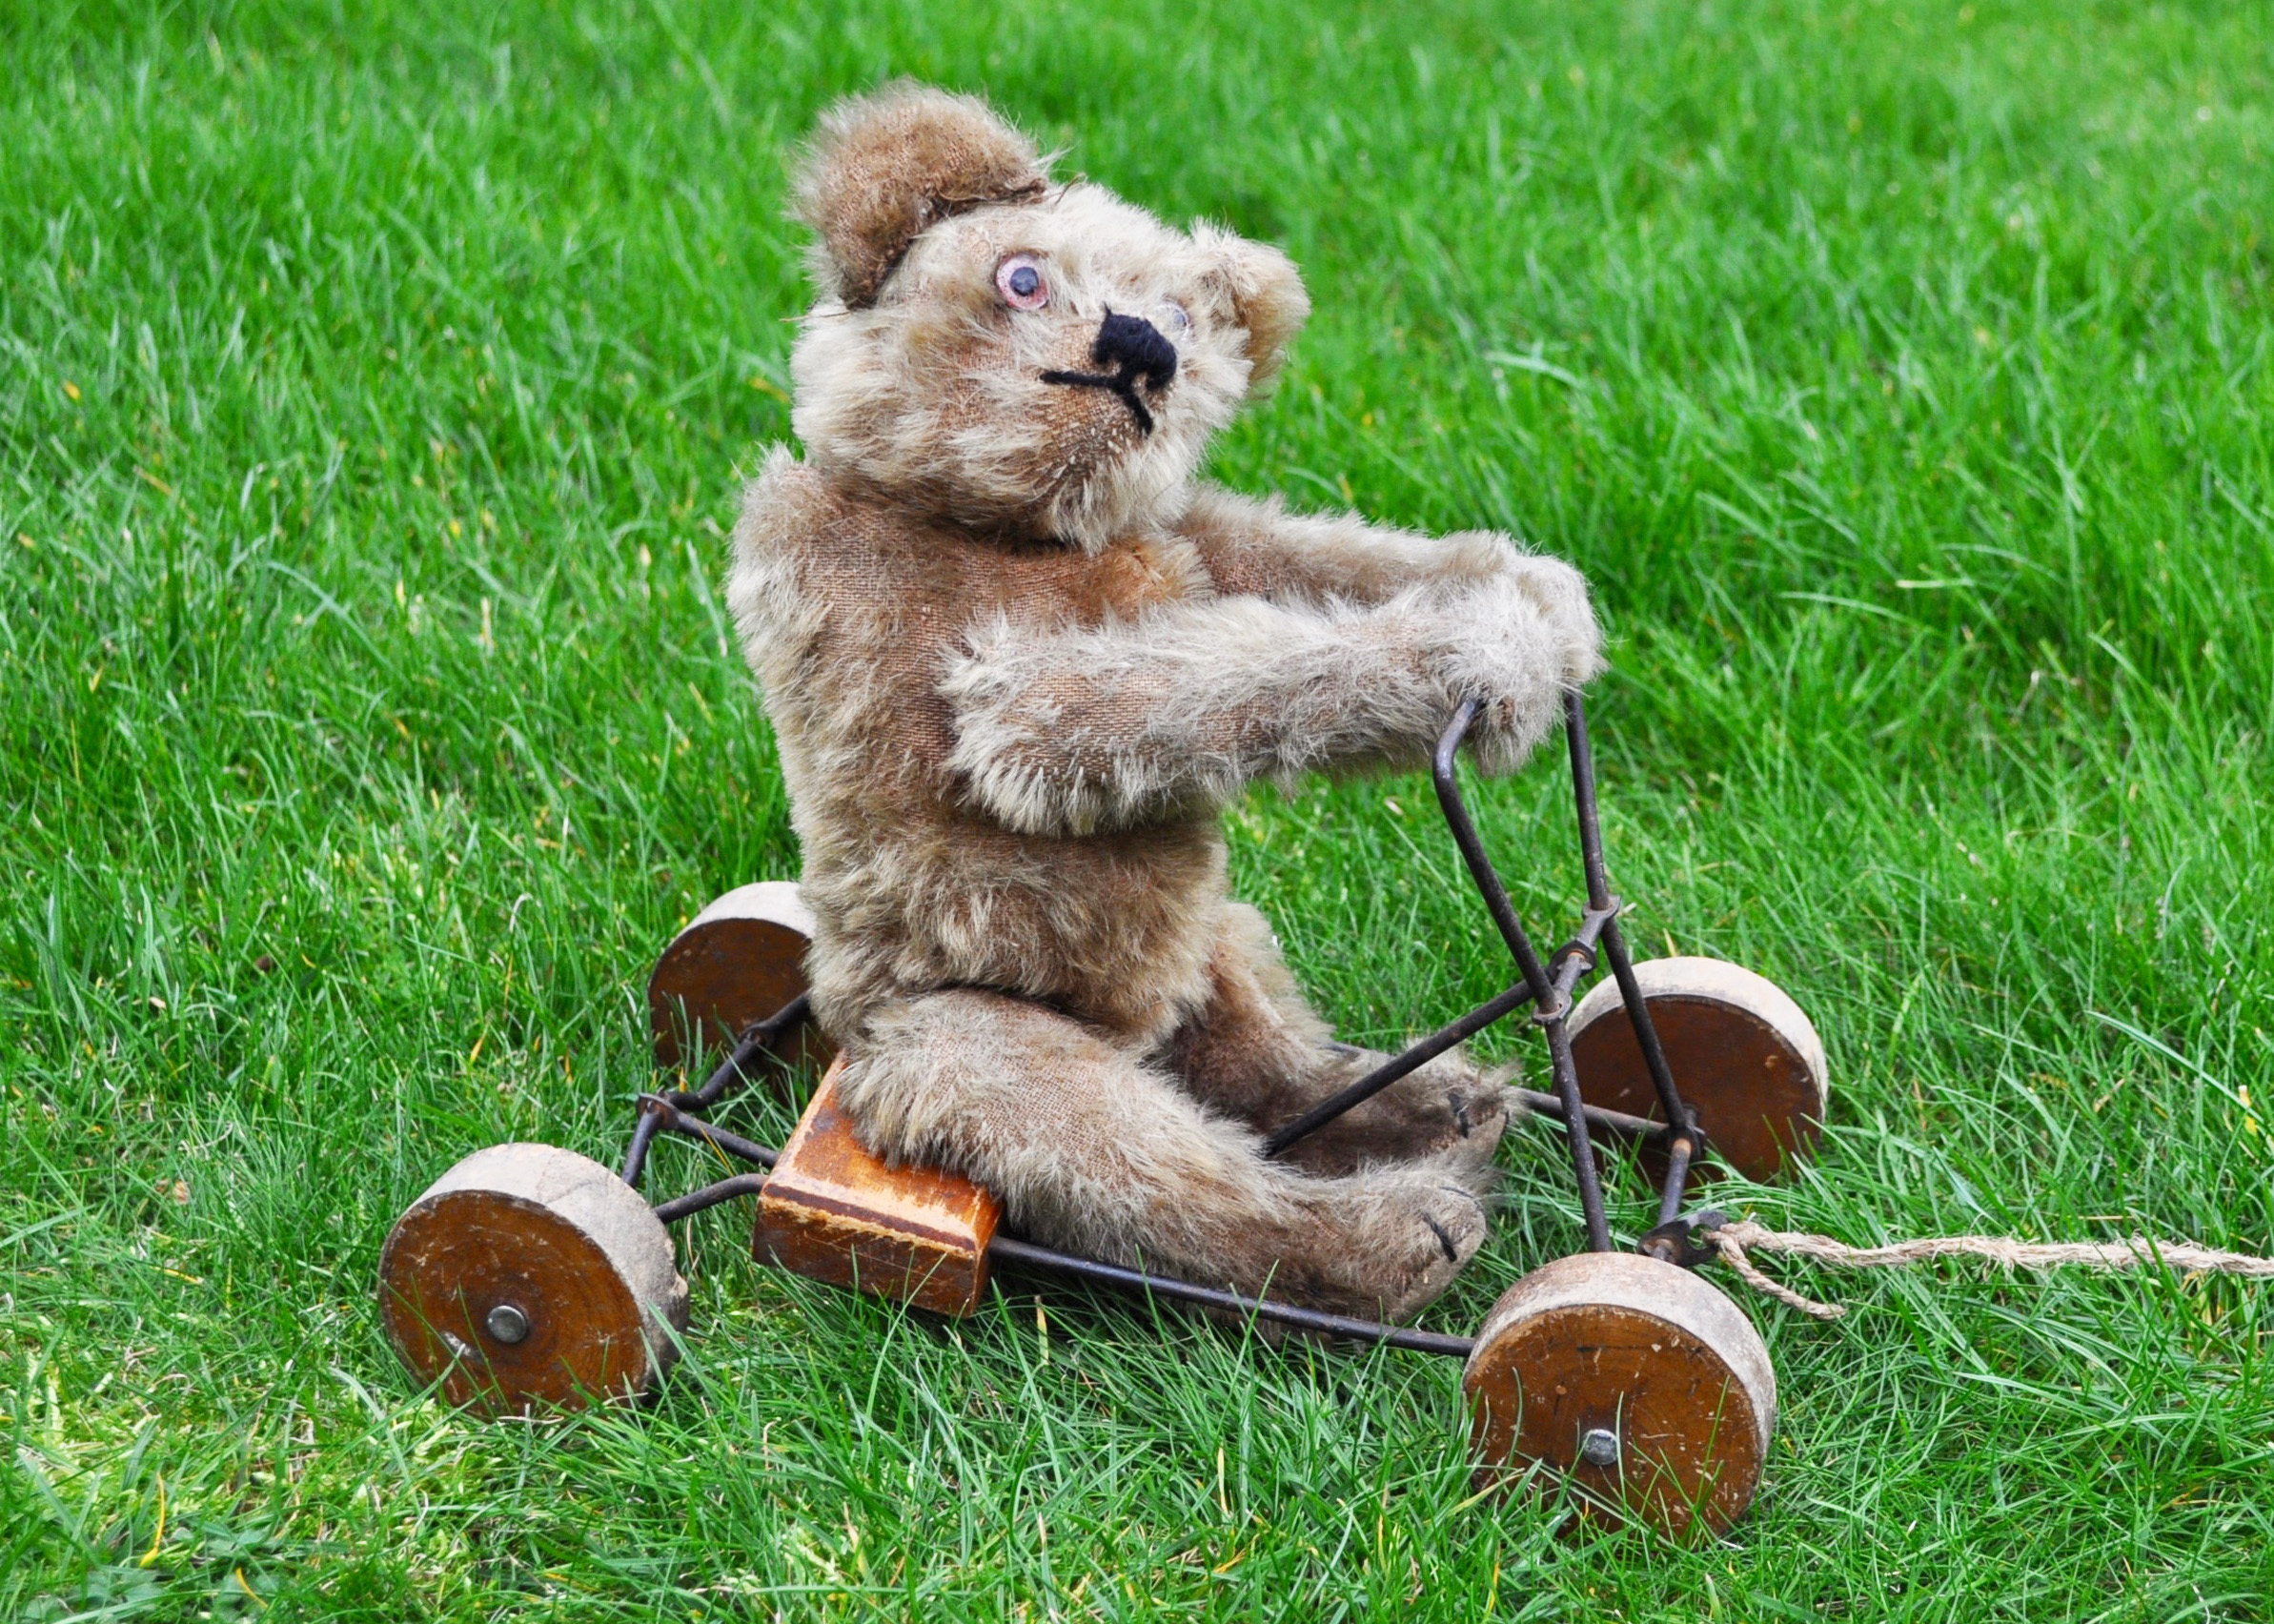 Bear Coaster a rare British United Toy Manufacturing Co Ltd Omega teddy bear coaster circa 1915,